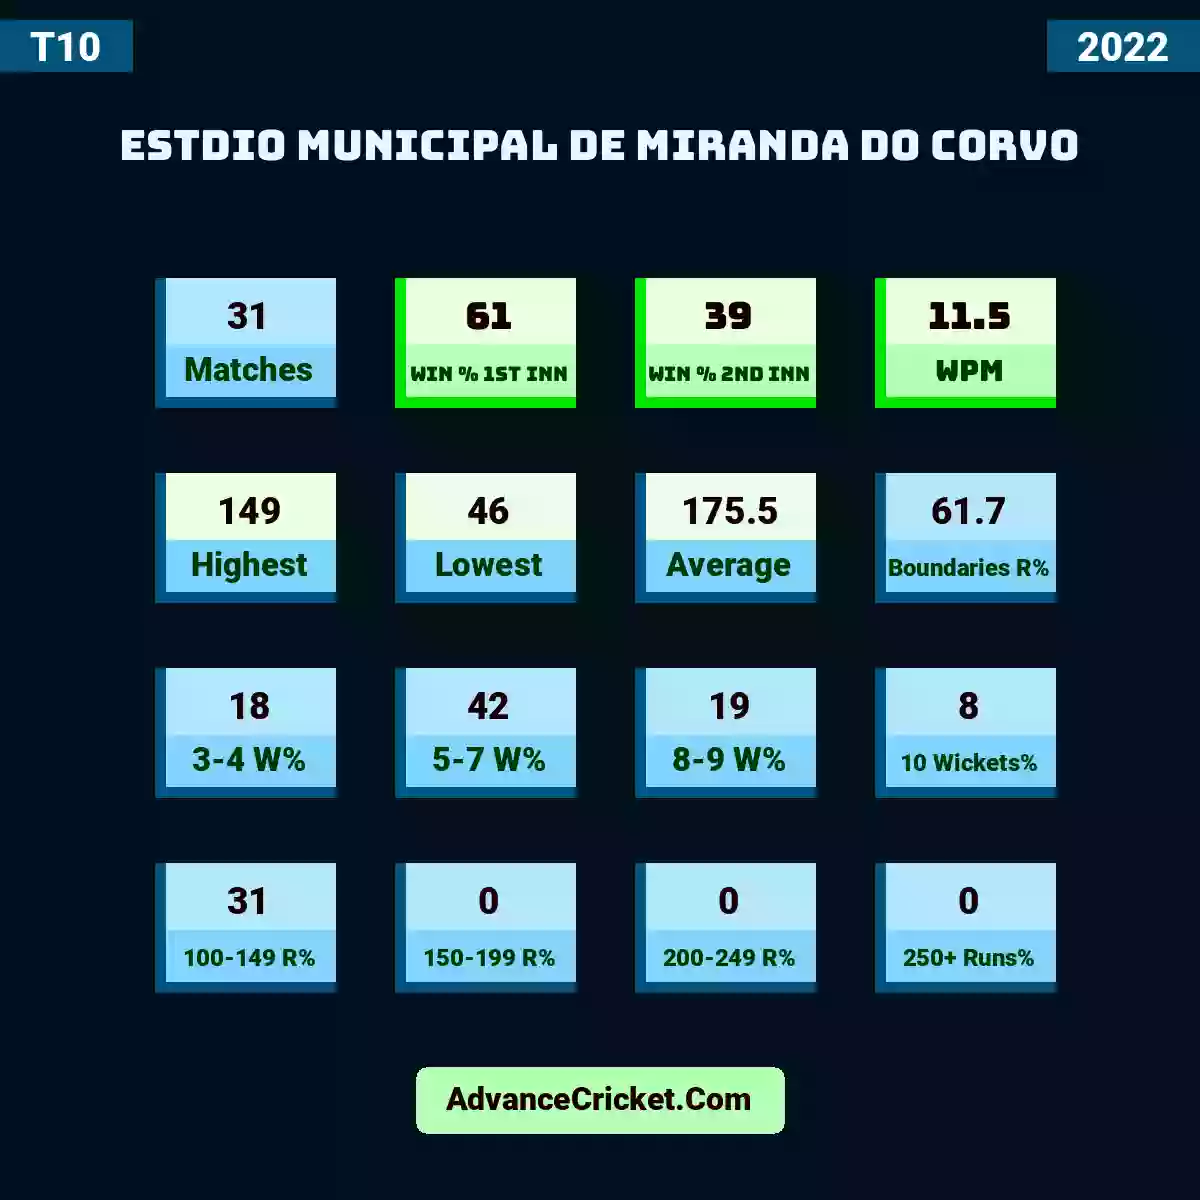 Image showing Estdio Municipal de Miranda do Corvo with Matches: 31, Win % 1st Inn: 61, Win % 2nd Inn: 39, WPM: 11.5, Highest: 149, Lowest: 46, Average: 175.5, Boundaries R%: 61.7, 3-4 W%: 18, 5-7 W%: 42, 8-9 W%: 19, 10 Wickets%: 8, 100-149 R%: 31, 150-199 R%: 0, 200-249 R%: 0, 250+ Runs%: 0.